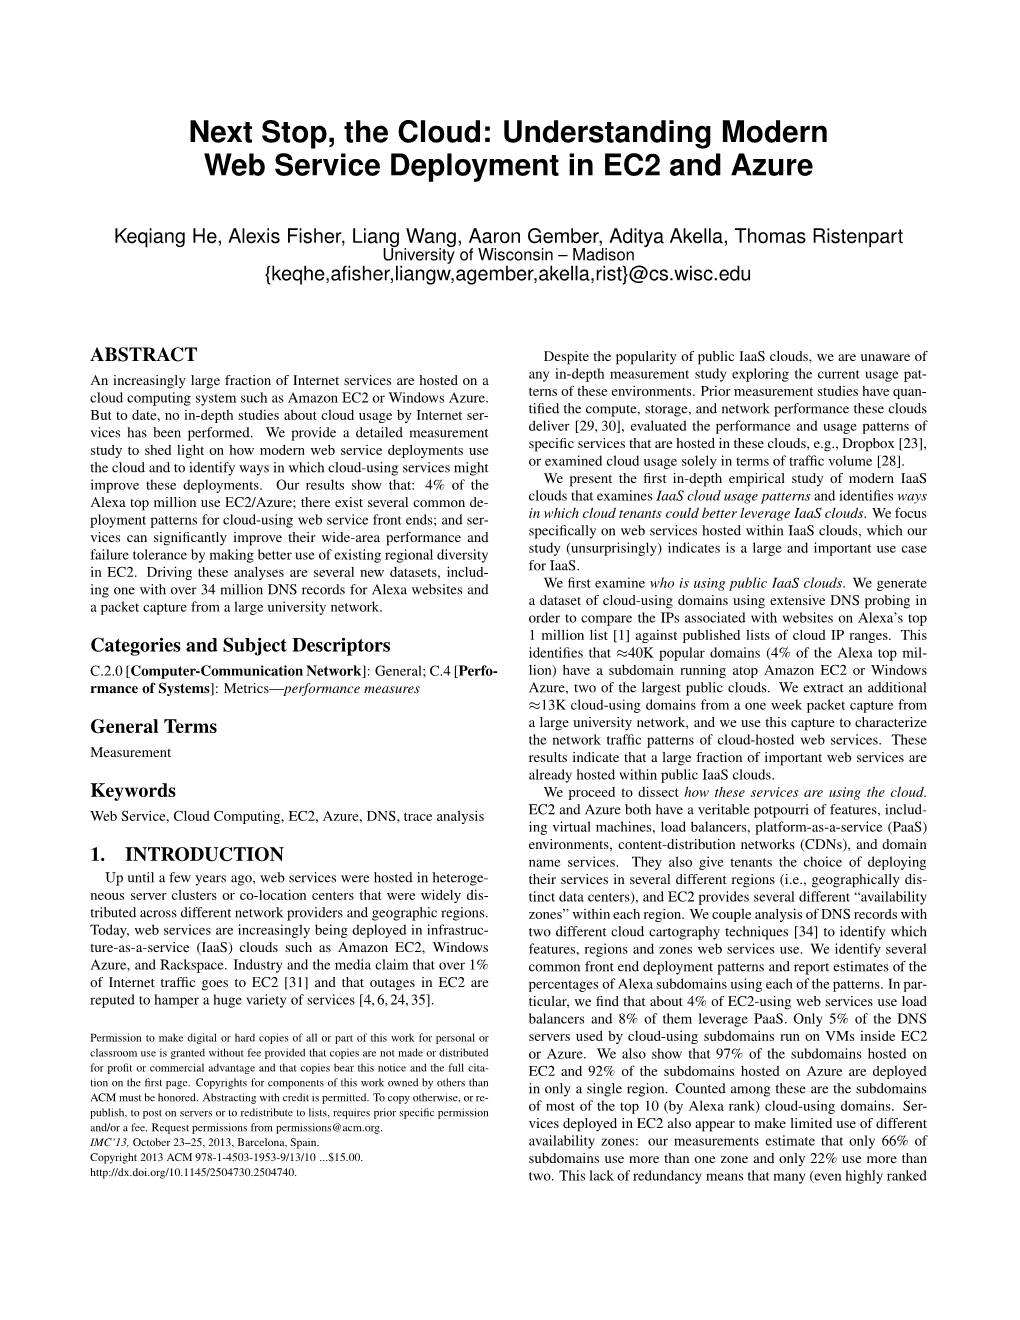 Understanding Modern Web Service Deployment in EC2 and Azure